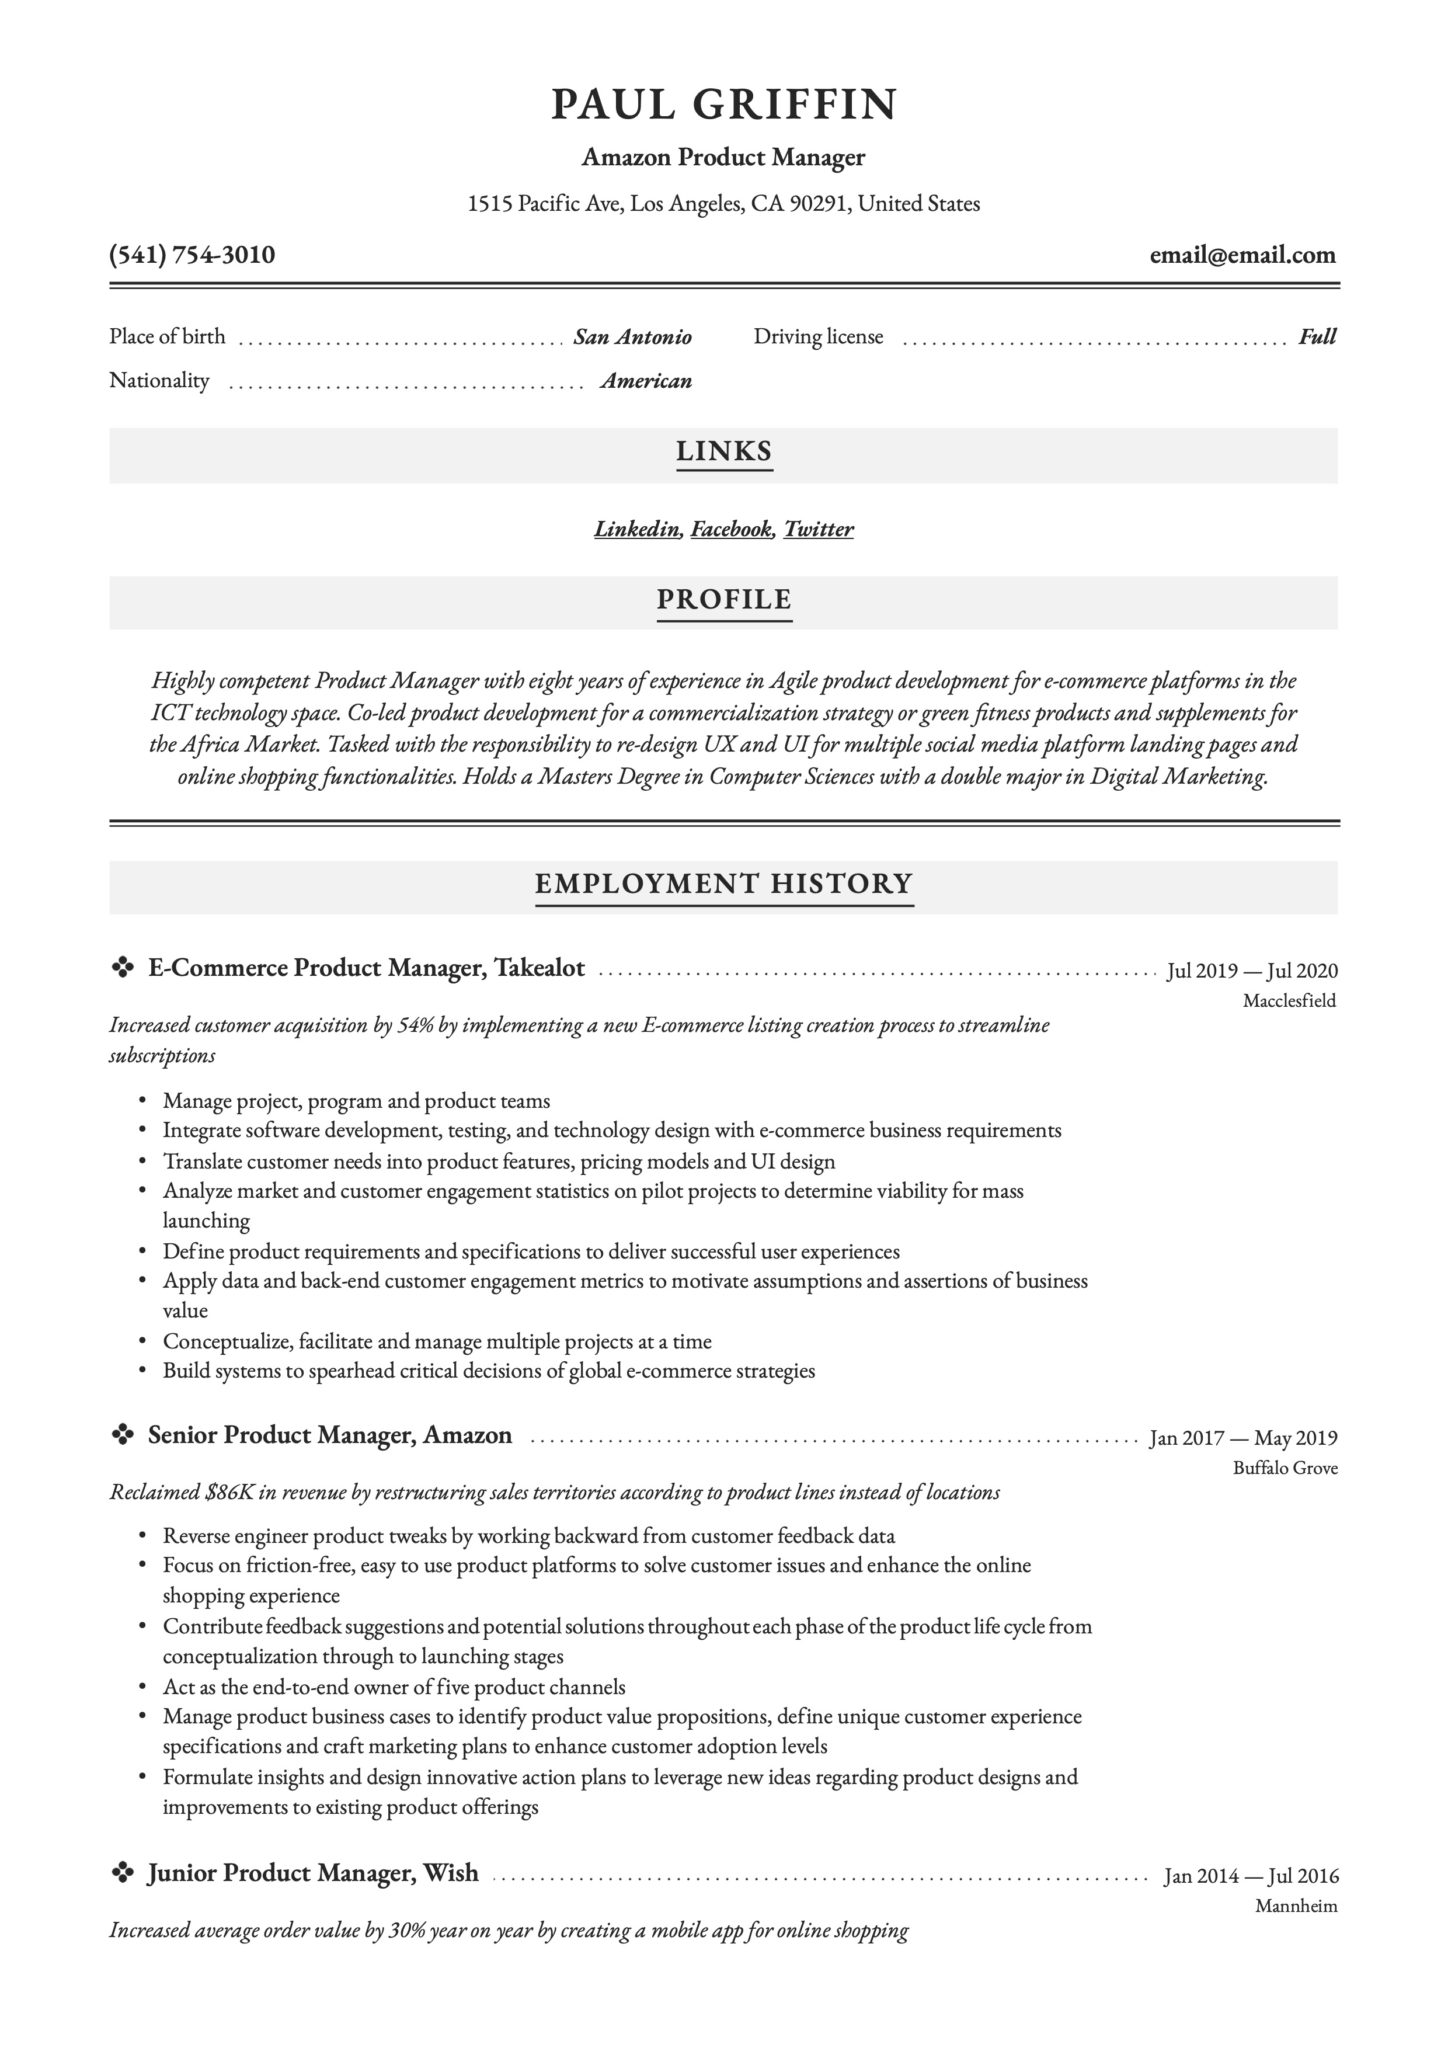 Professional Resume Example Amazon Product Manager